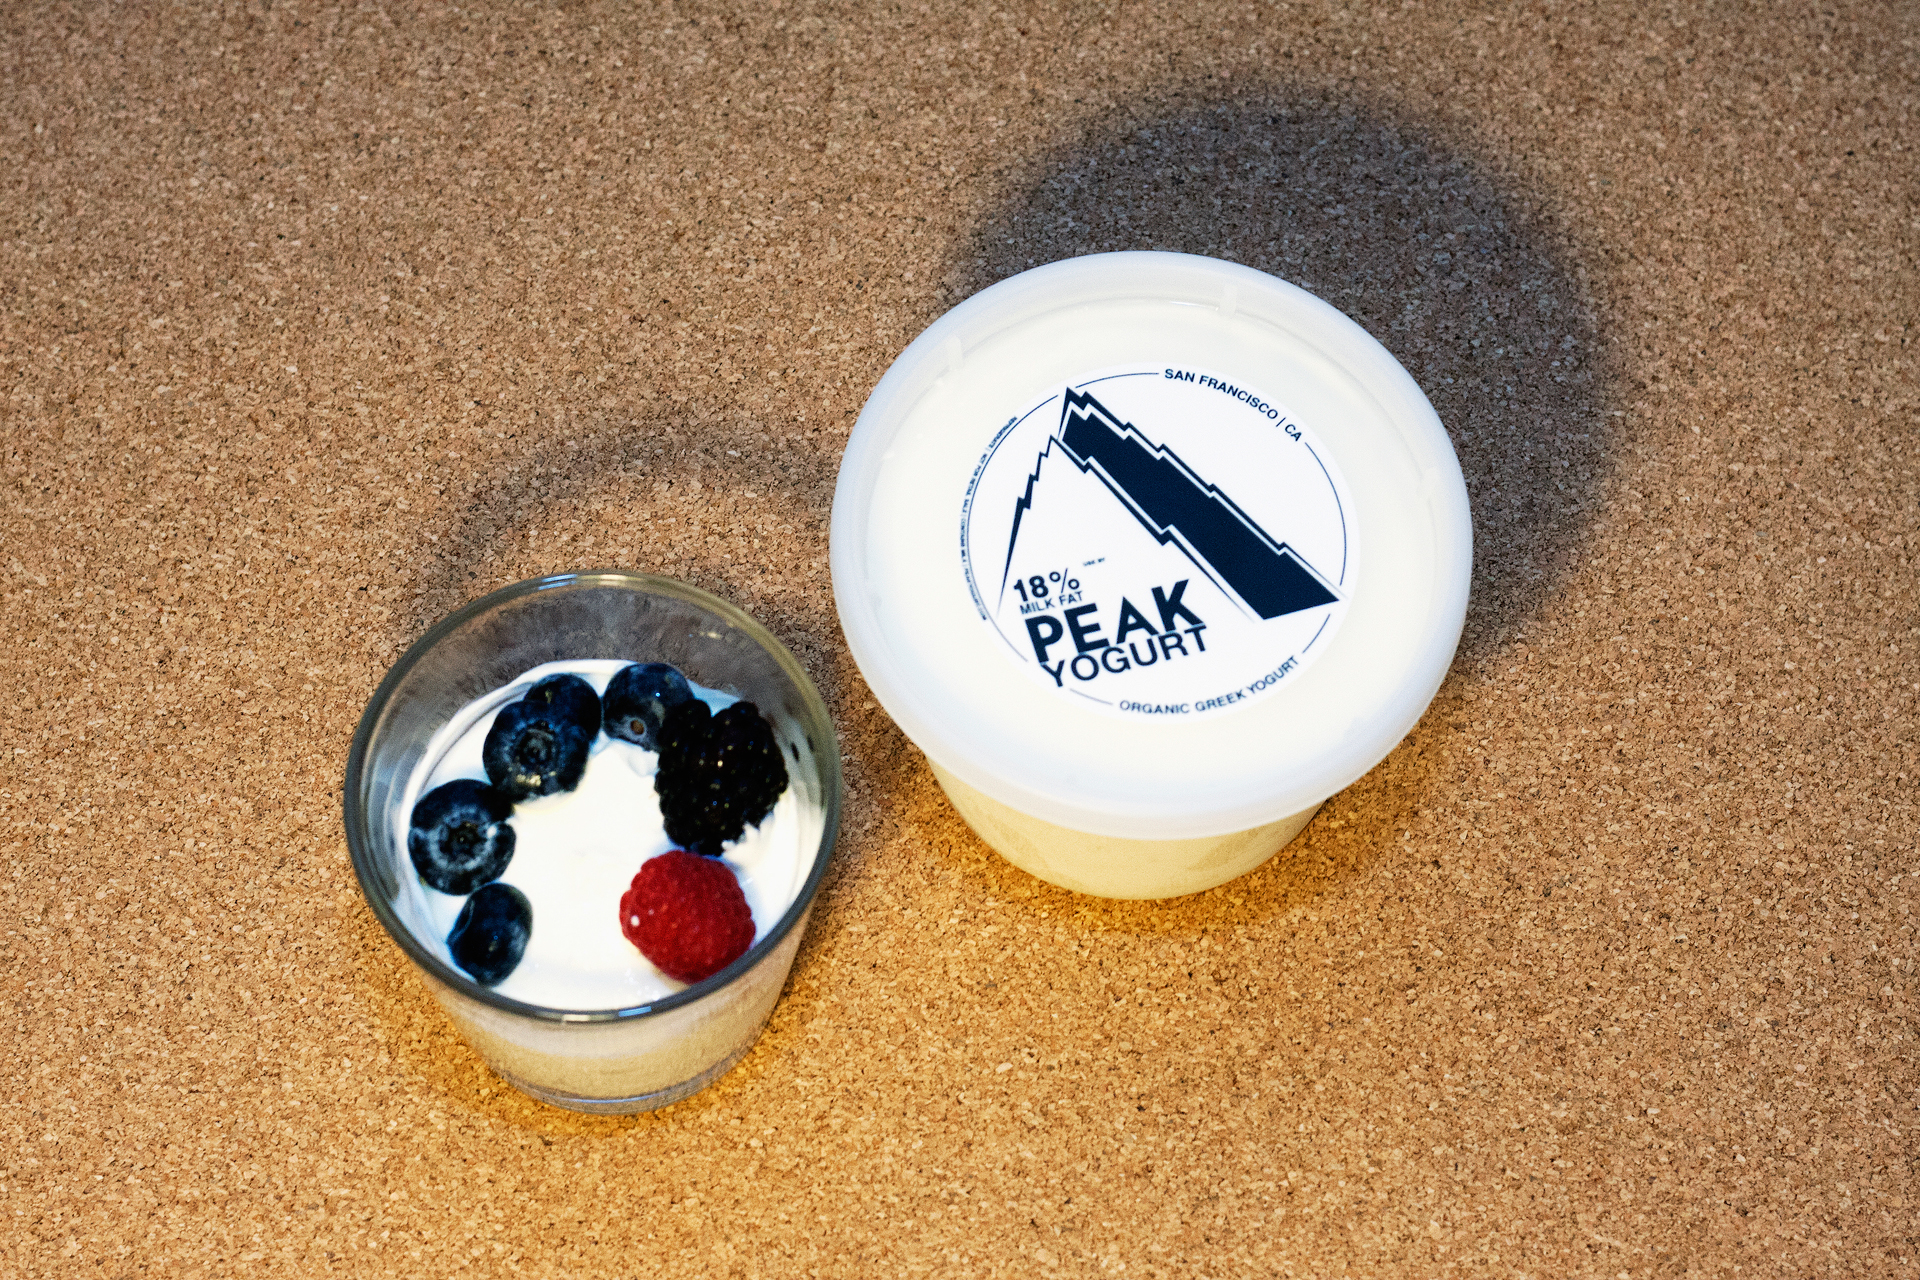 Peak Yogurt tastes great with berries or honey, says Sims, just like other yogurts.